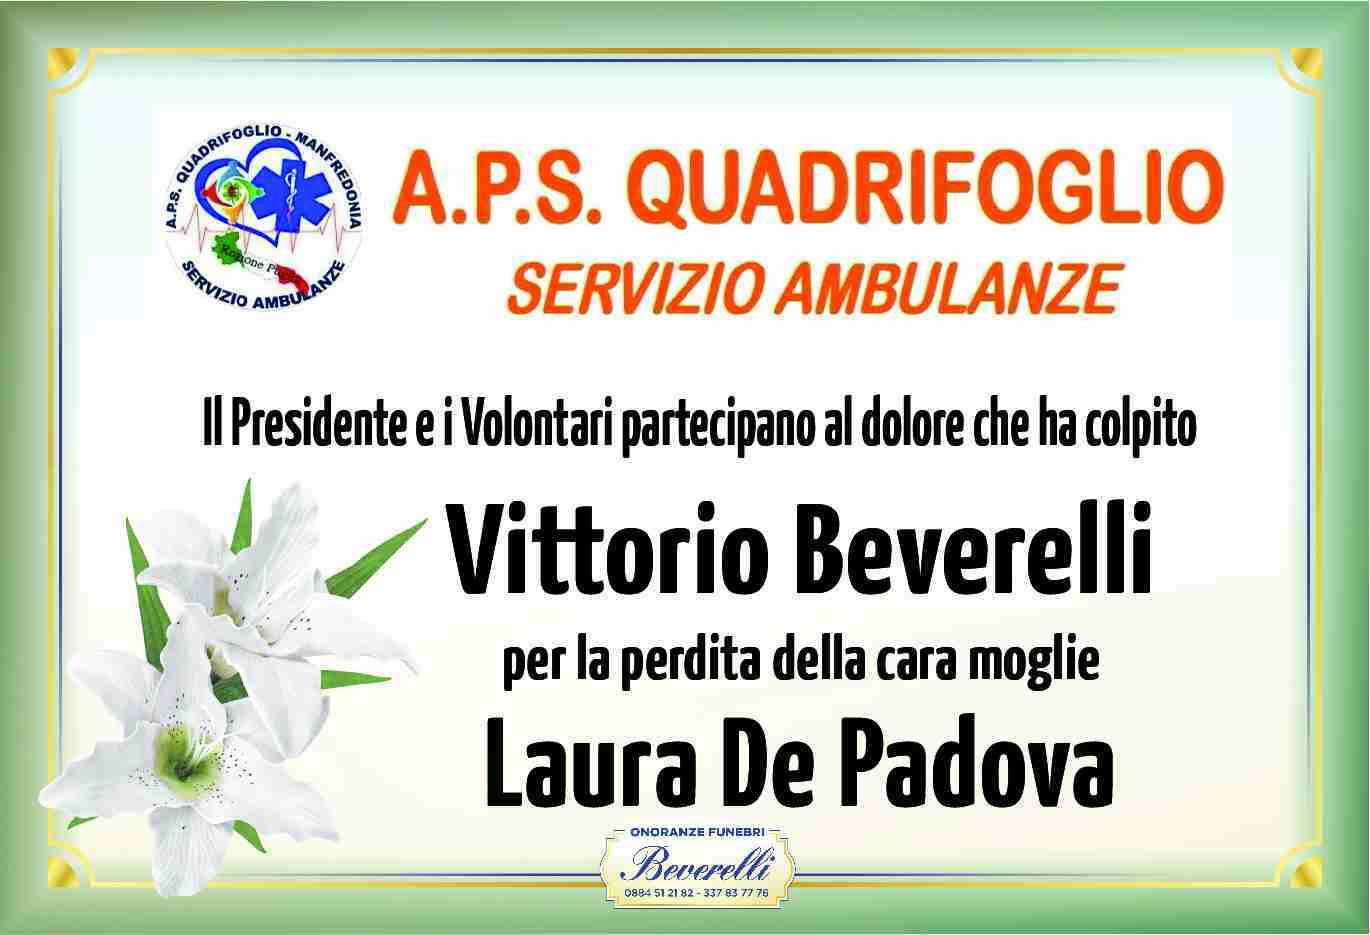 Laura De Padova